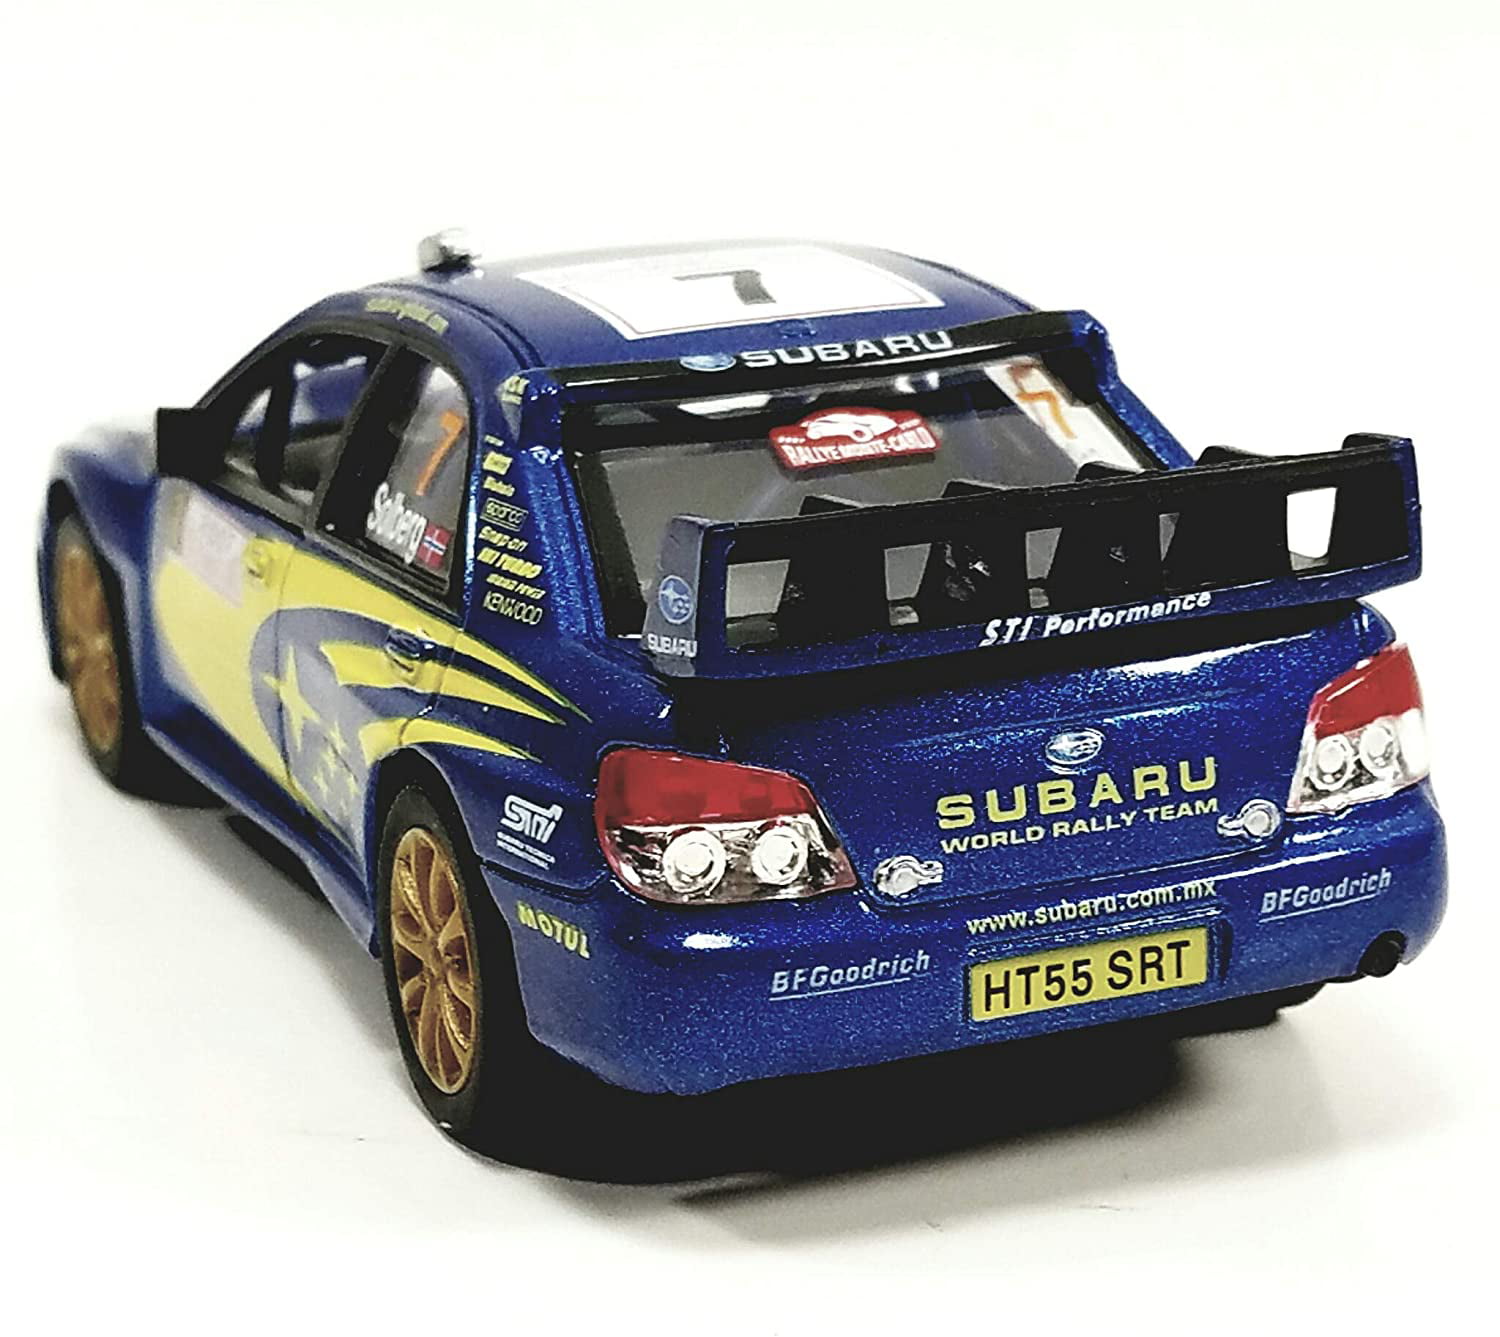 étui Solberg kinsmart T3 Subaru Impreza WRC modèle de voiture 1:36 Taille RALLYE BLEU 